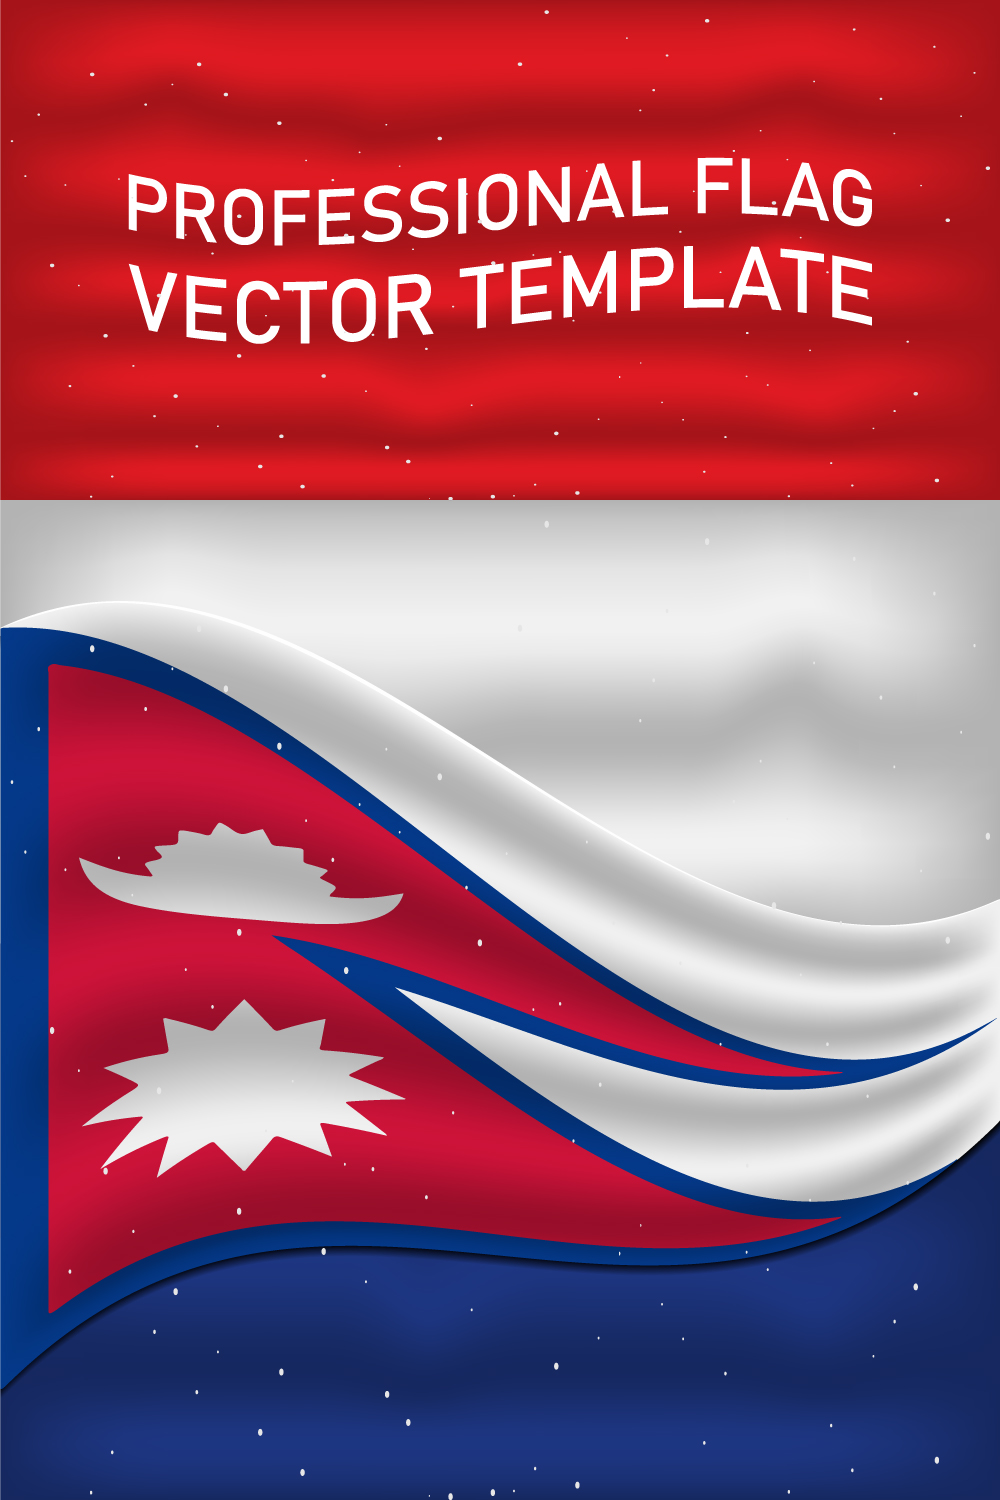 Enchanting image of the flag of Nepal.